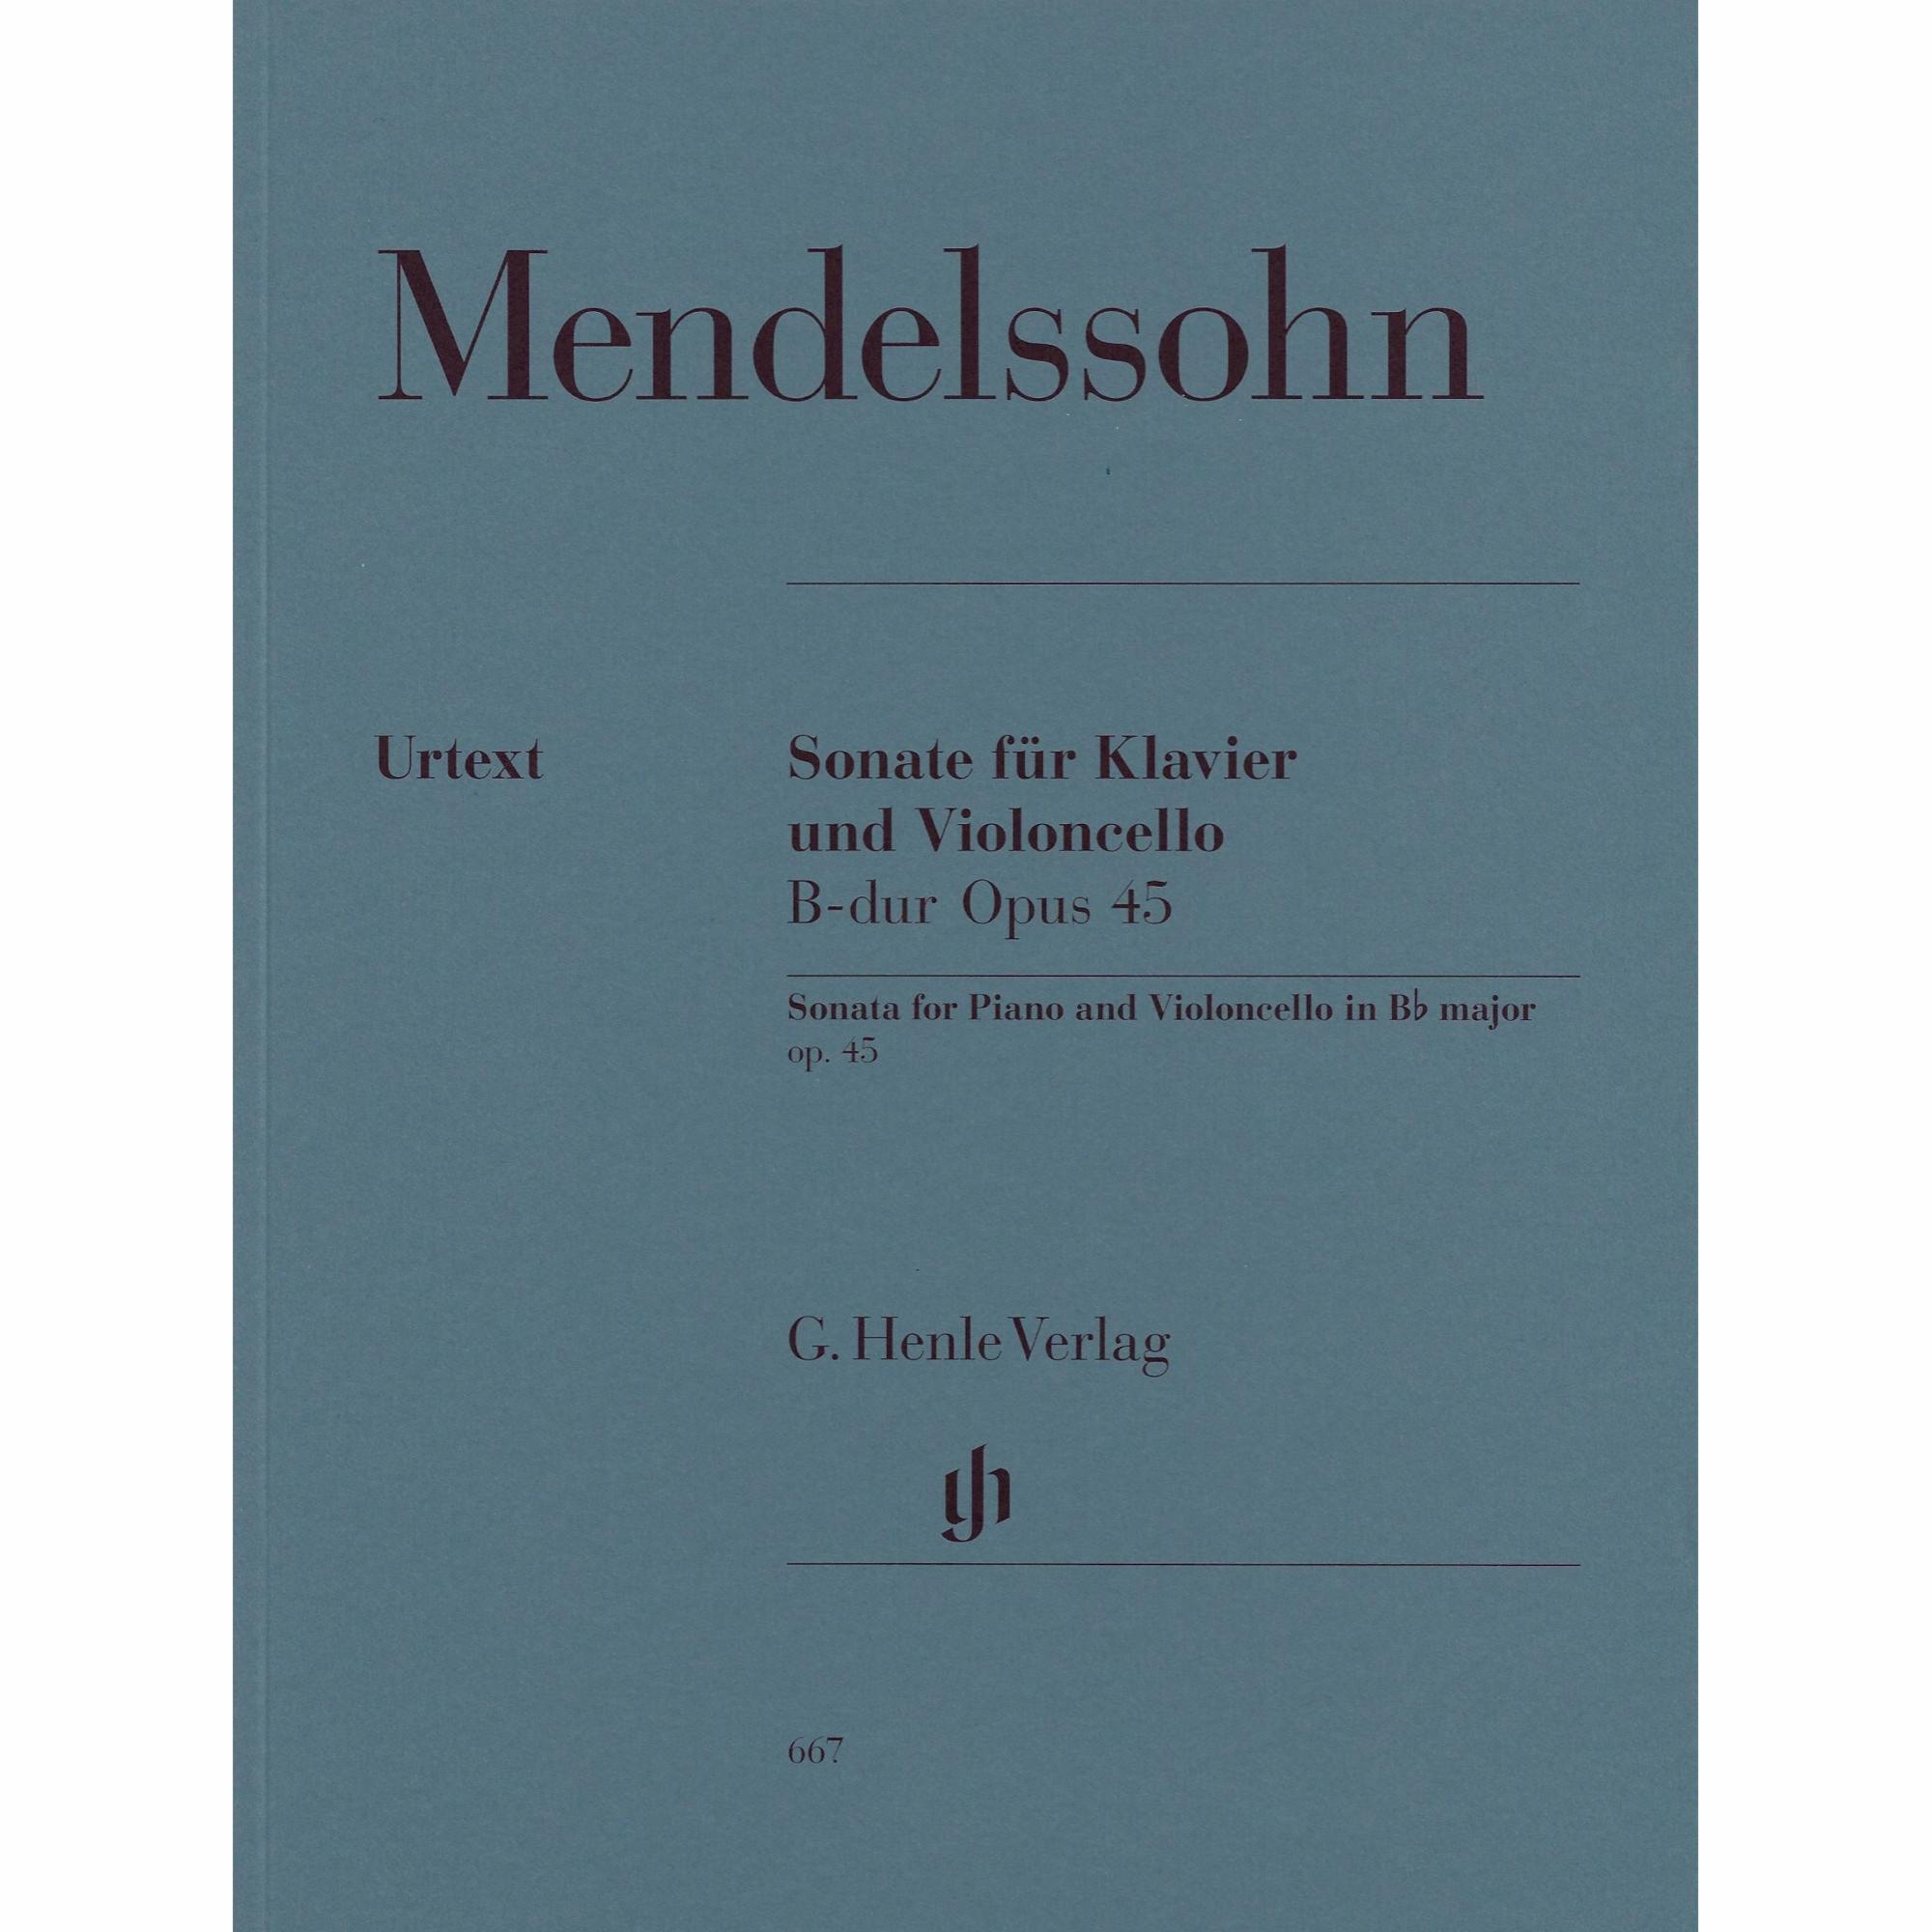 Cello Sonata No. 1 in B-flat Major, Op. 45